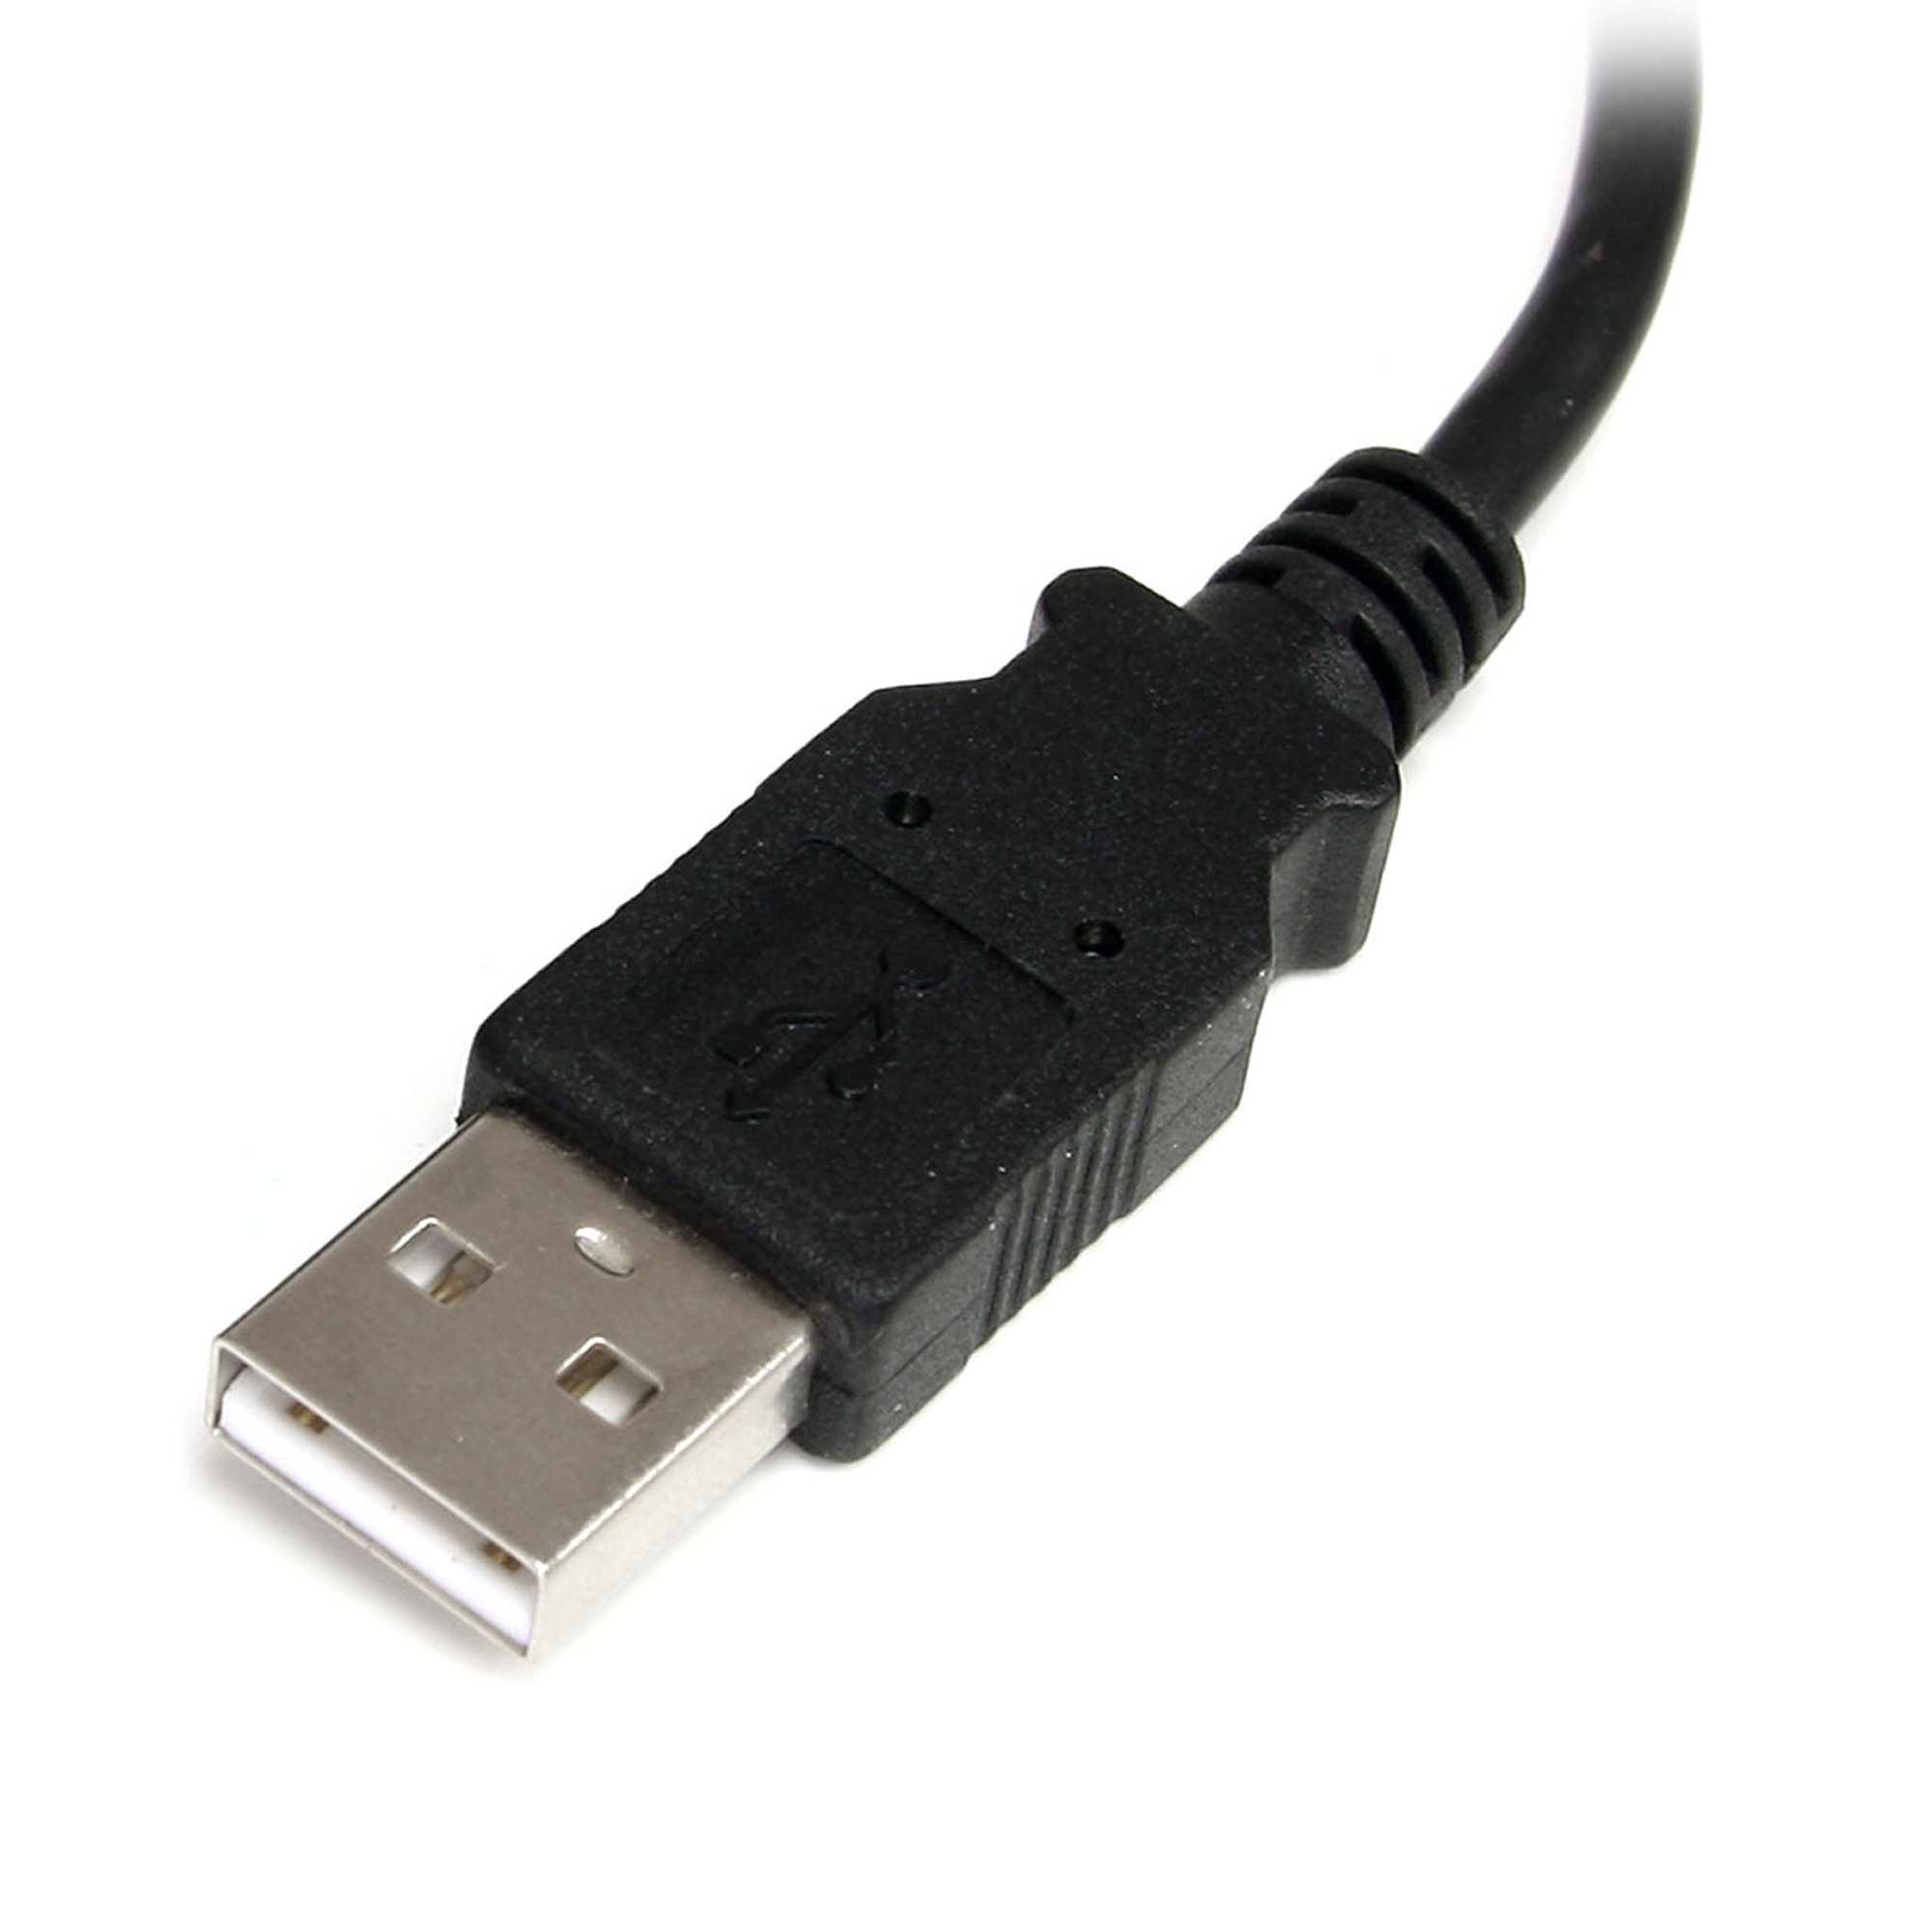 V.92 Hardware Base StarTech USB56KEMH2 56K USB Dial-up & Fax Modem External 